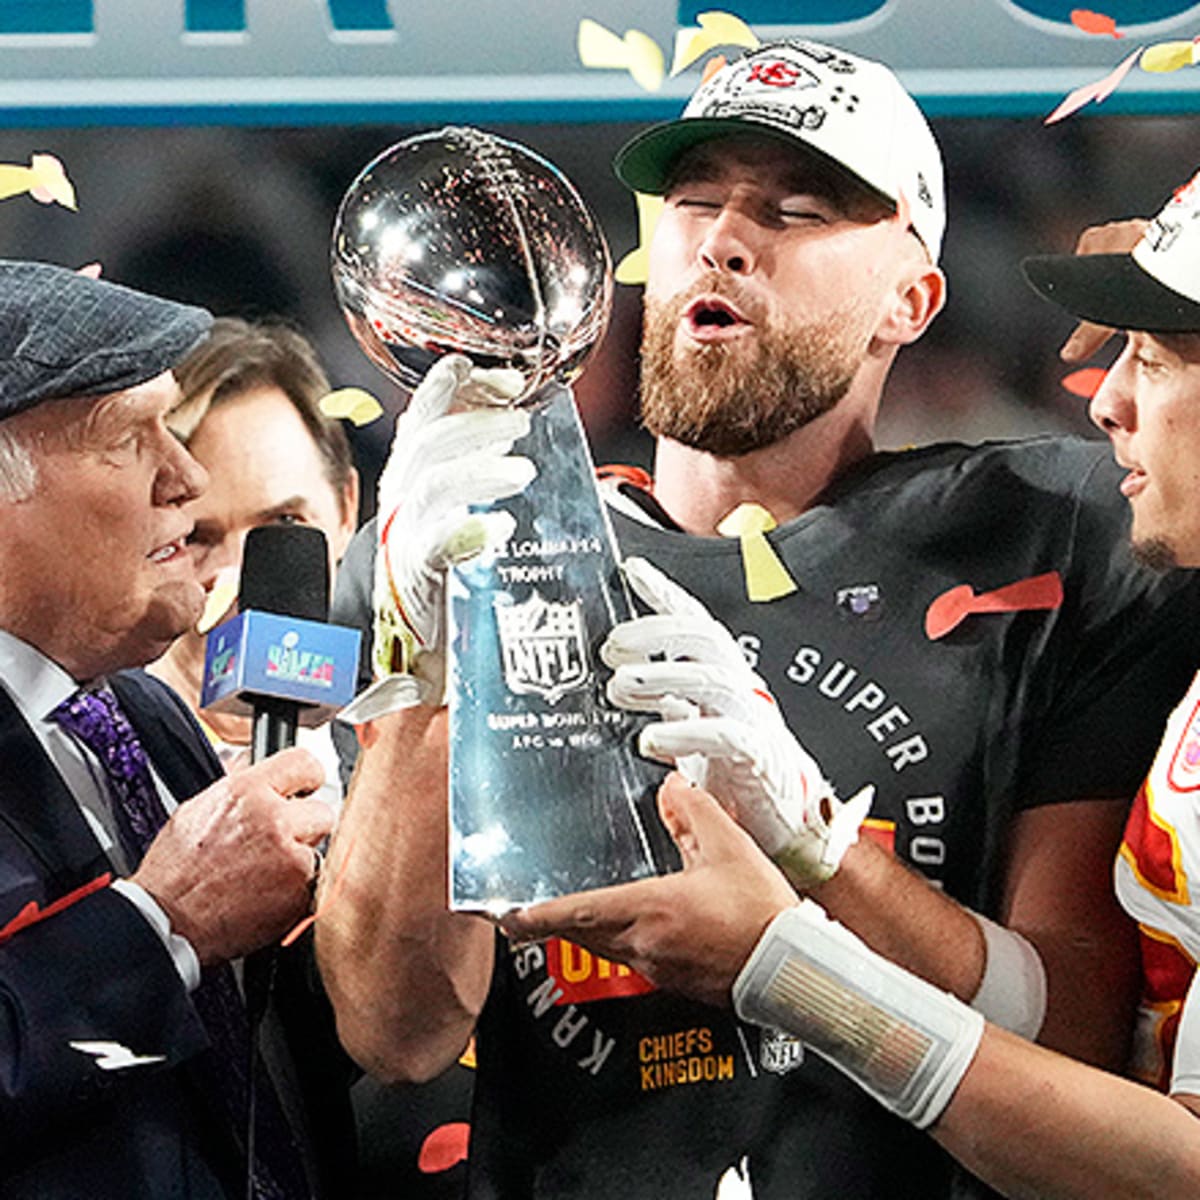 Giants, Jets connections aplenty in Chiefs, Buccaneers Super Bowl